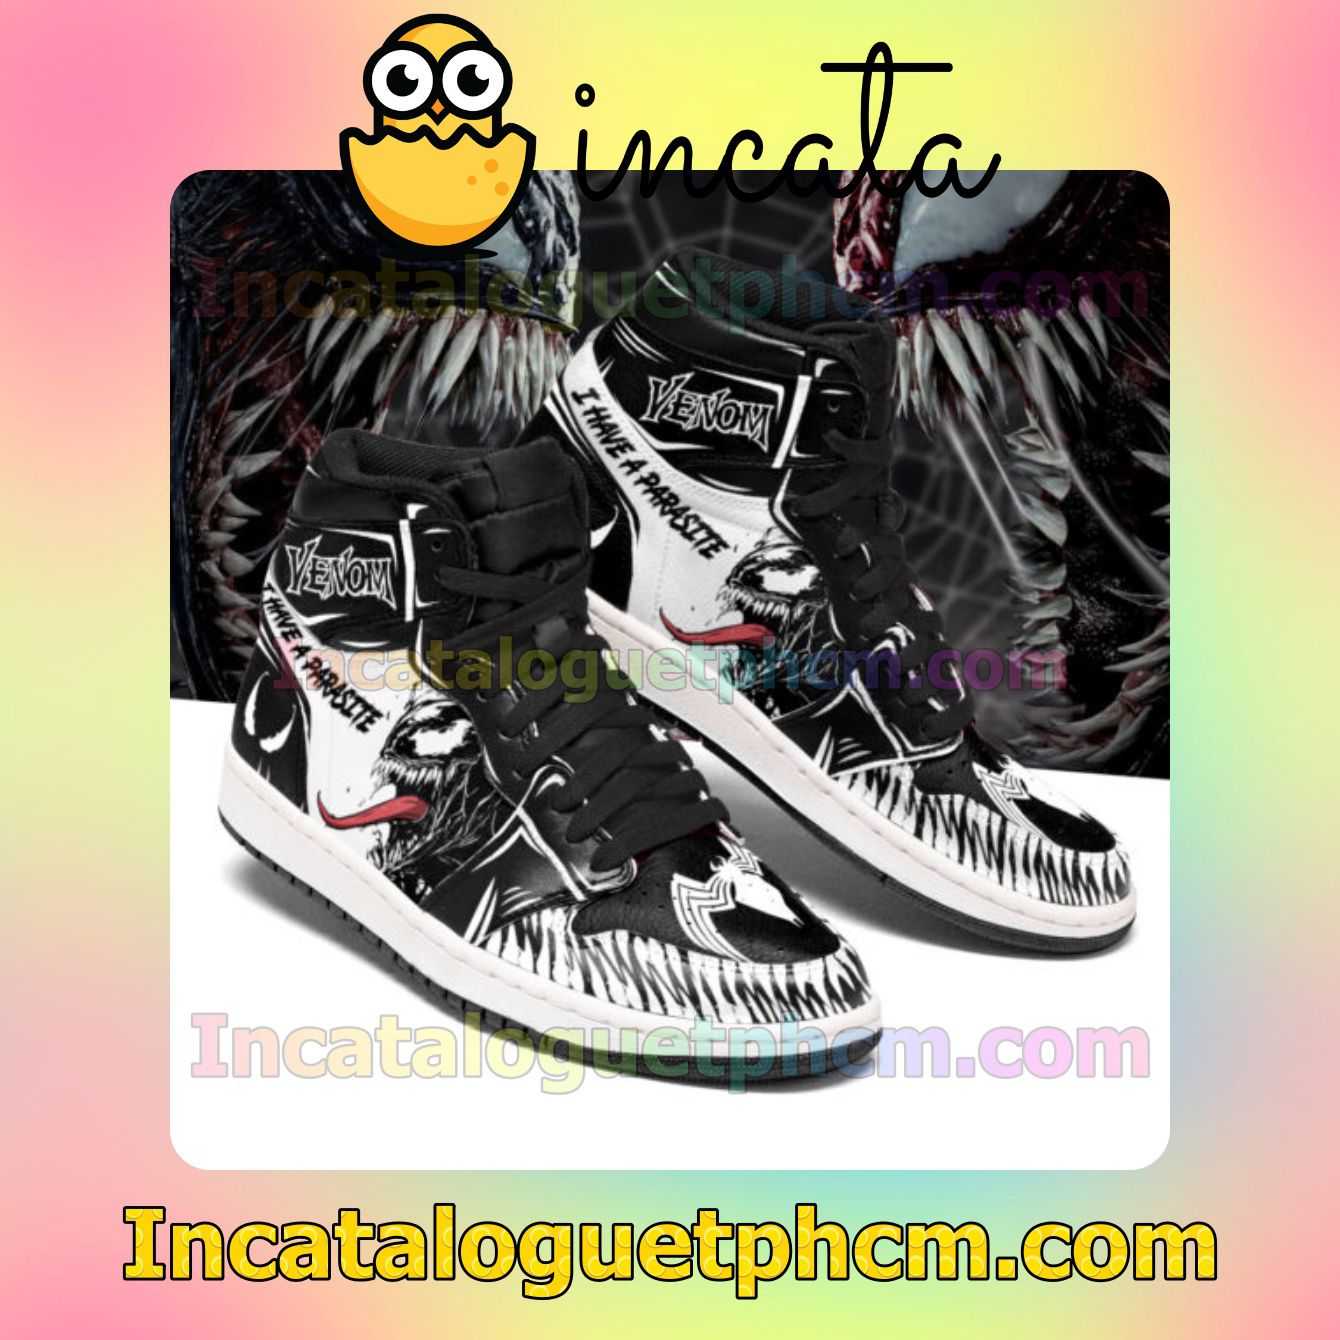 Beautiful Venom I have a Parasite Air Jordan Black Air Jordan 1 Inspired Shoes